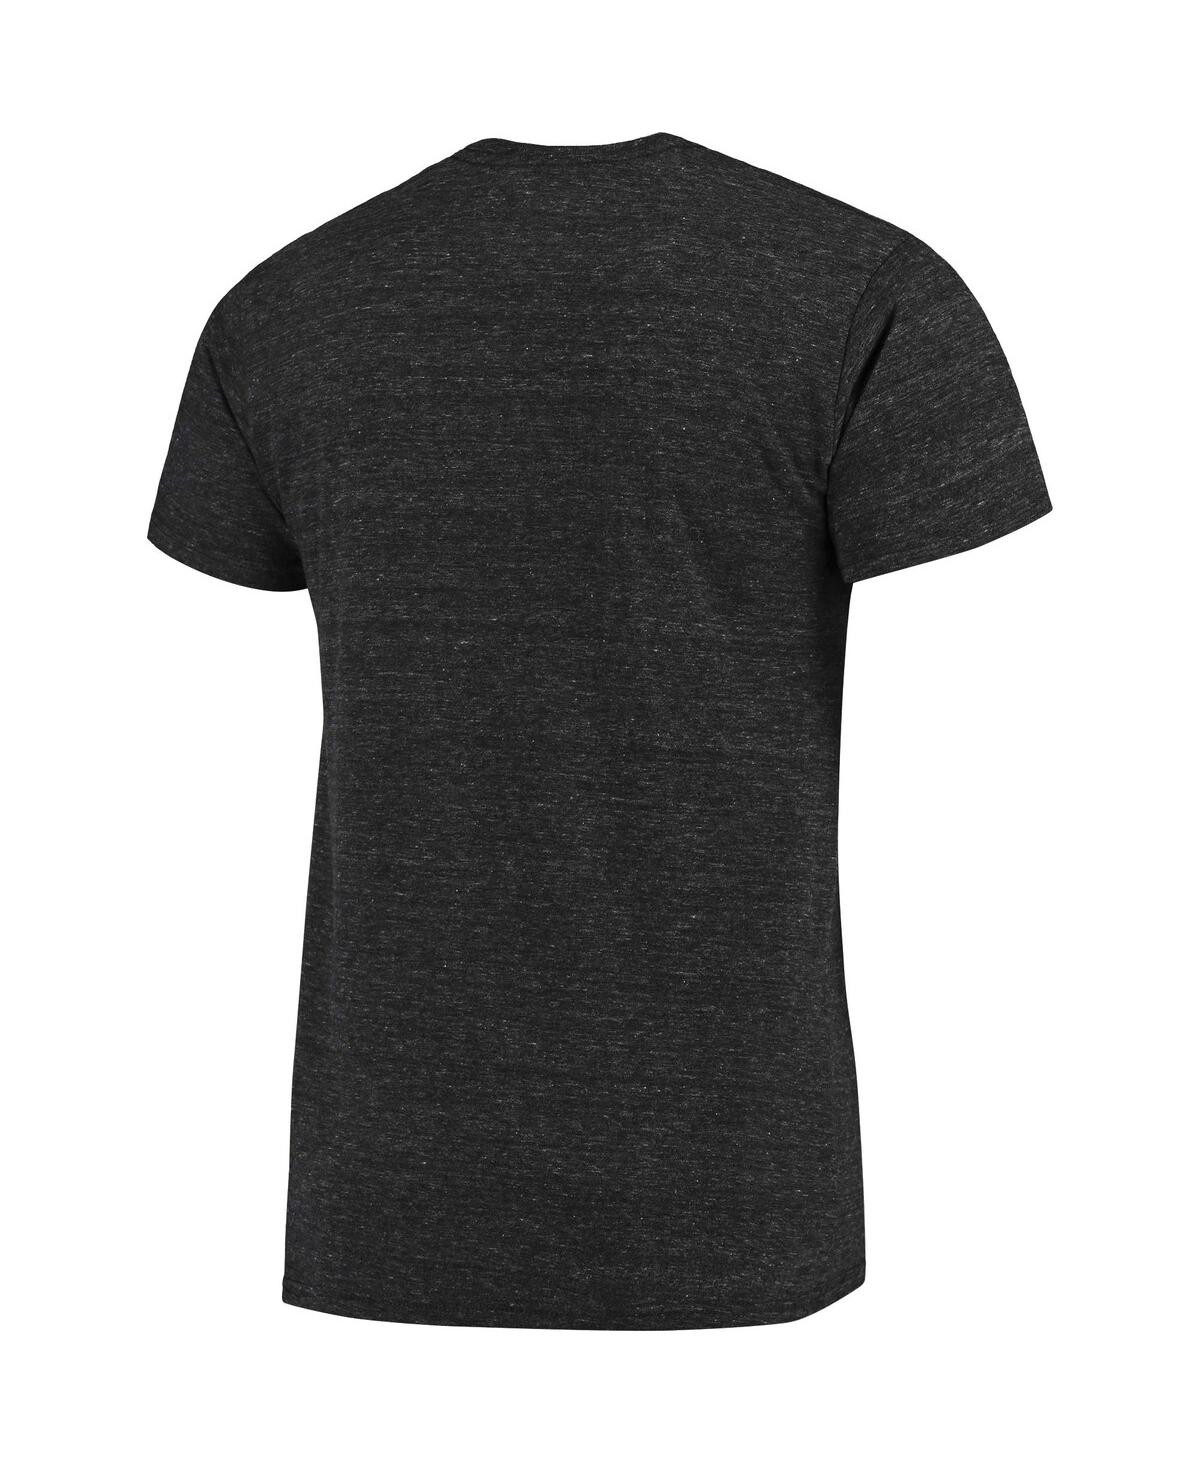 Shop Retro Brand Men's Original  Heathered Black Tennessee Volunteers Vintage-inspired Tri-blend T-shirt